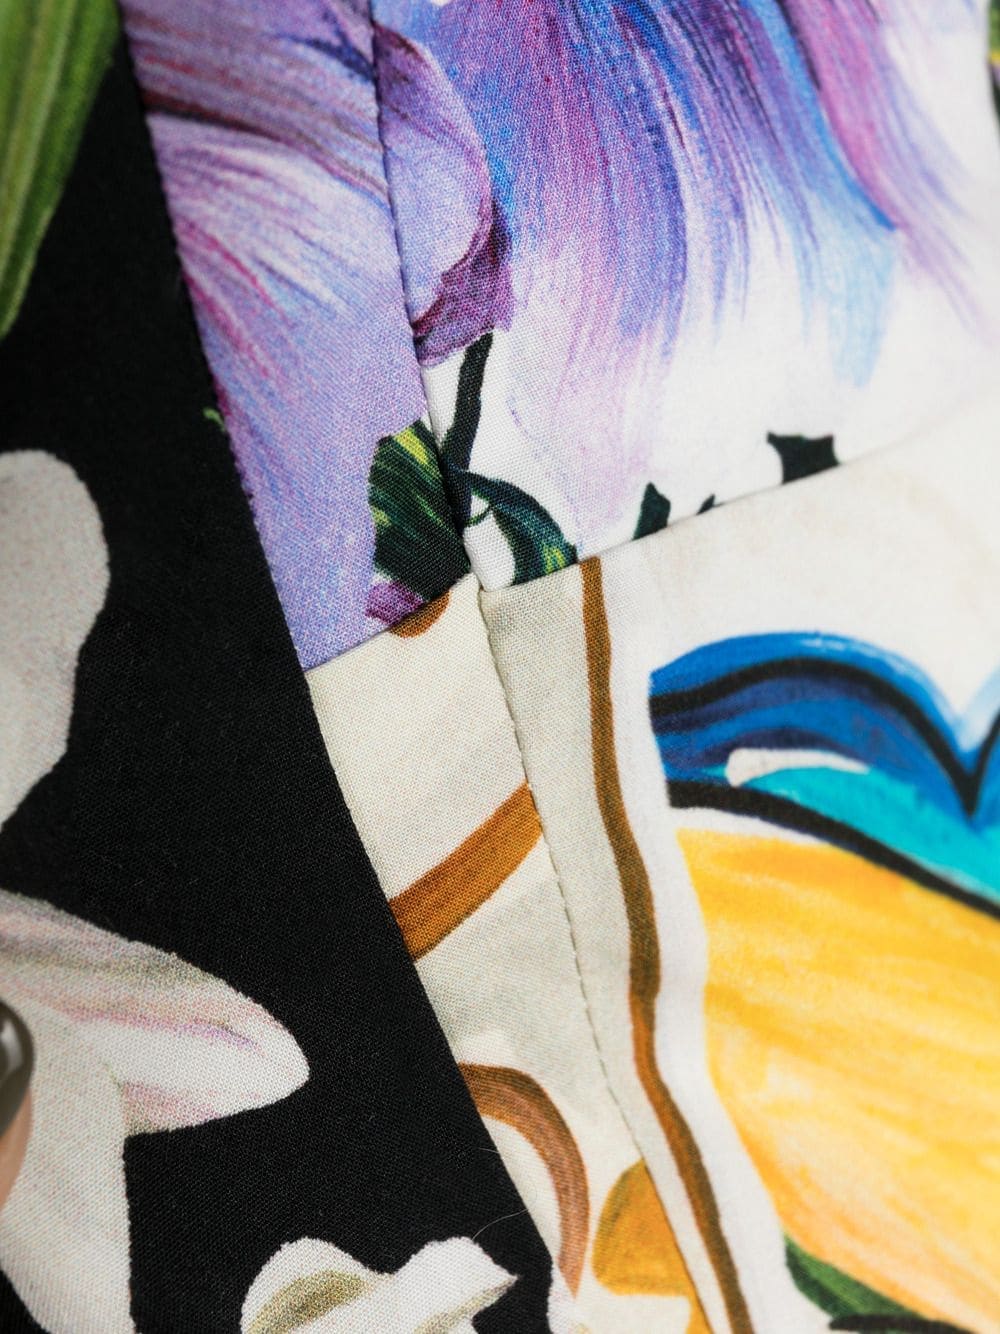 Dolce & Gabbana Floral Patchwork Print Dress